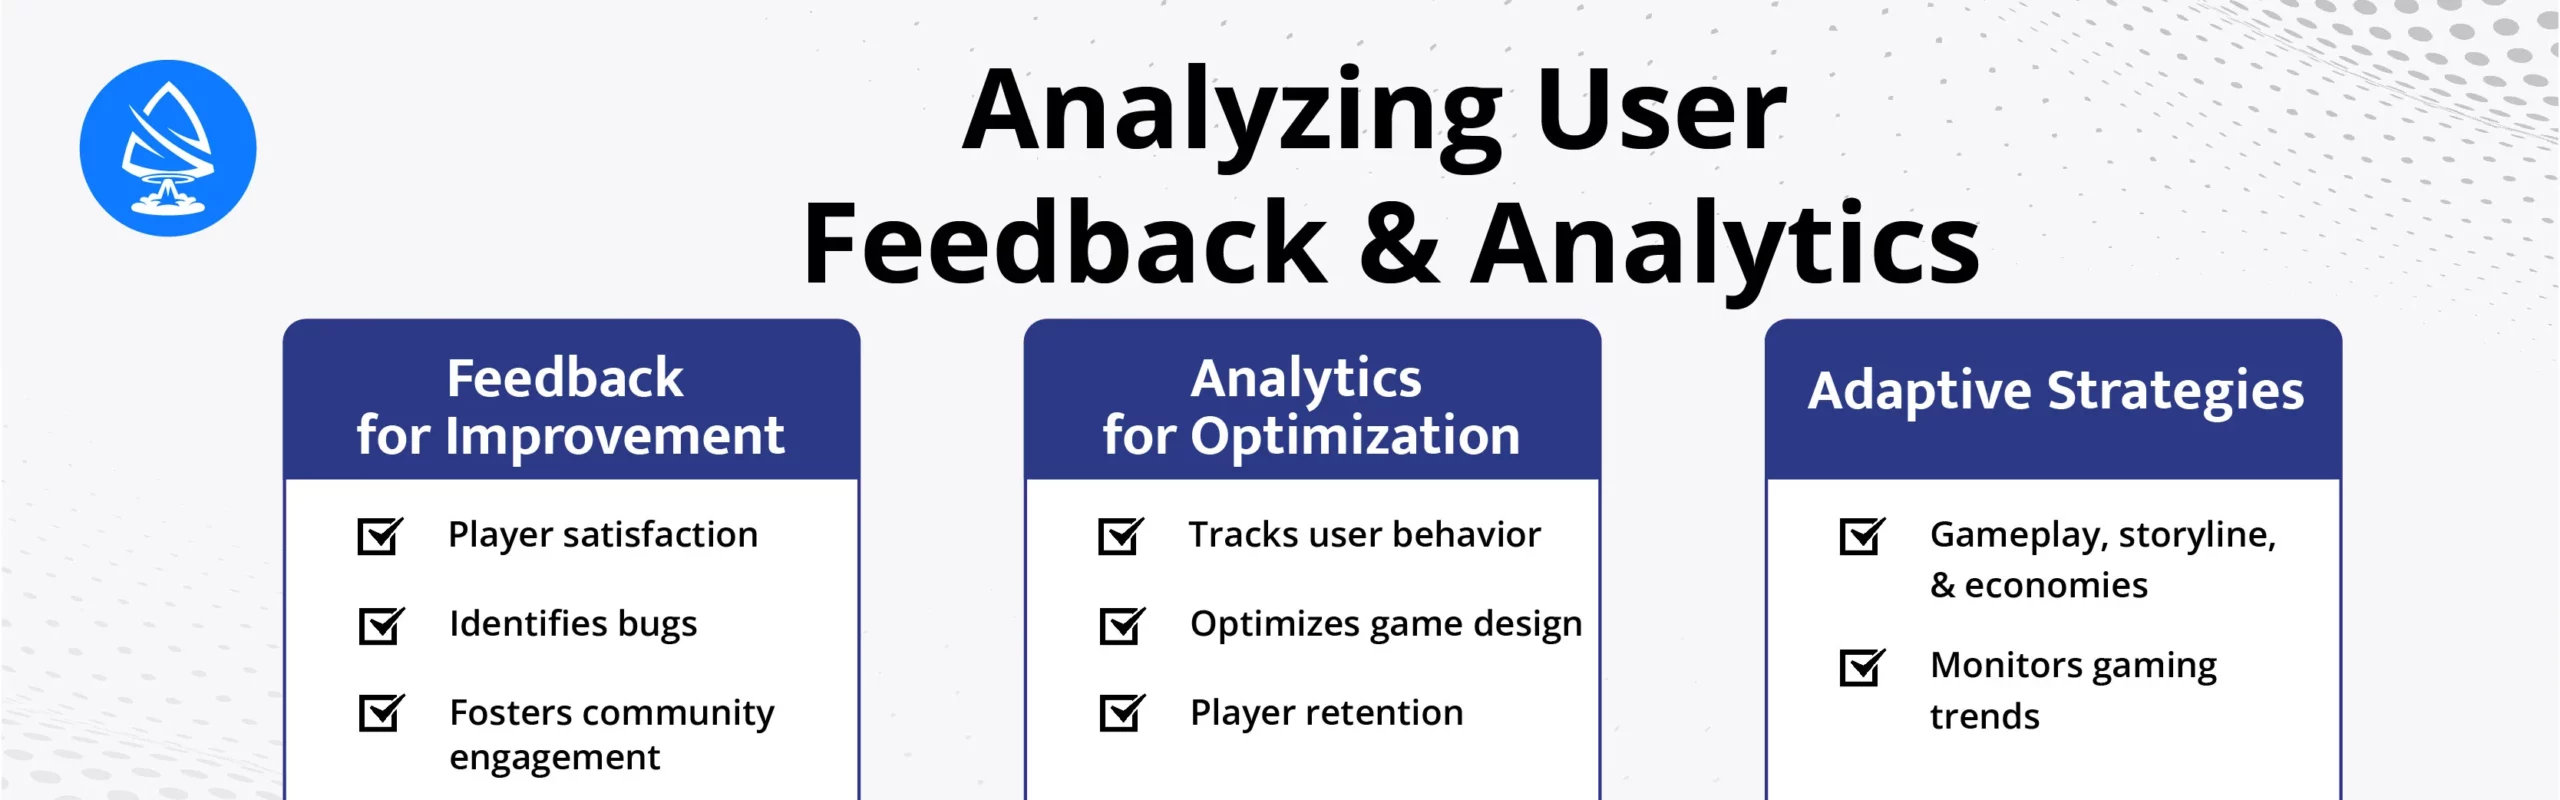 Analyzing User Feedback and Analytics